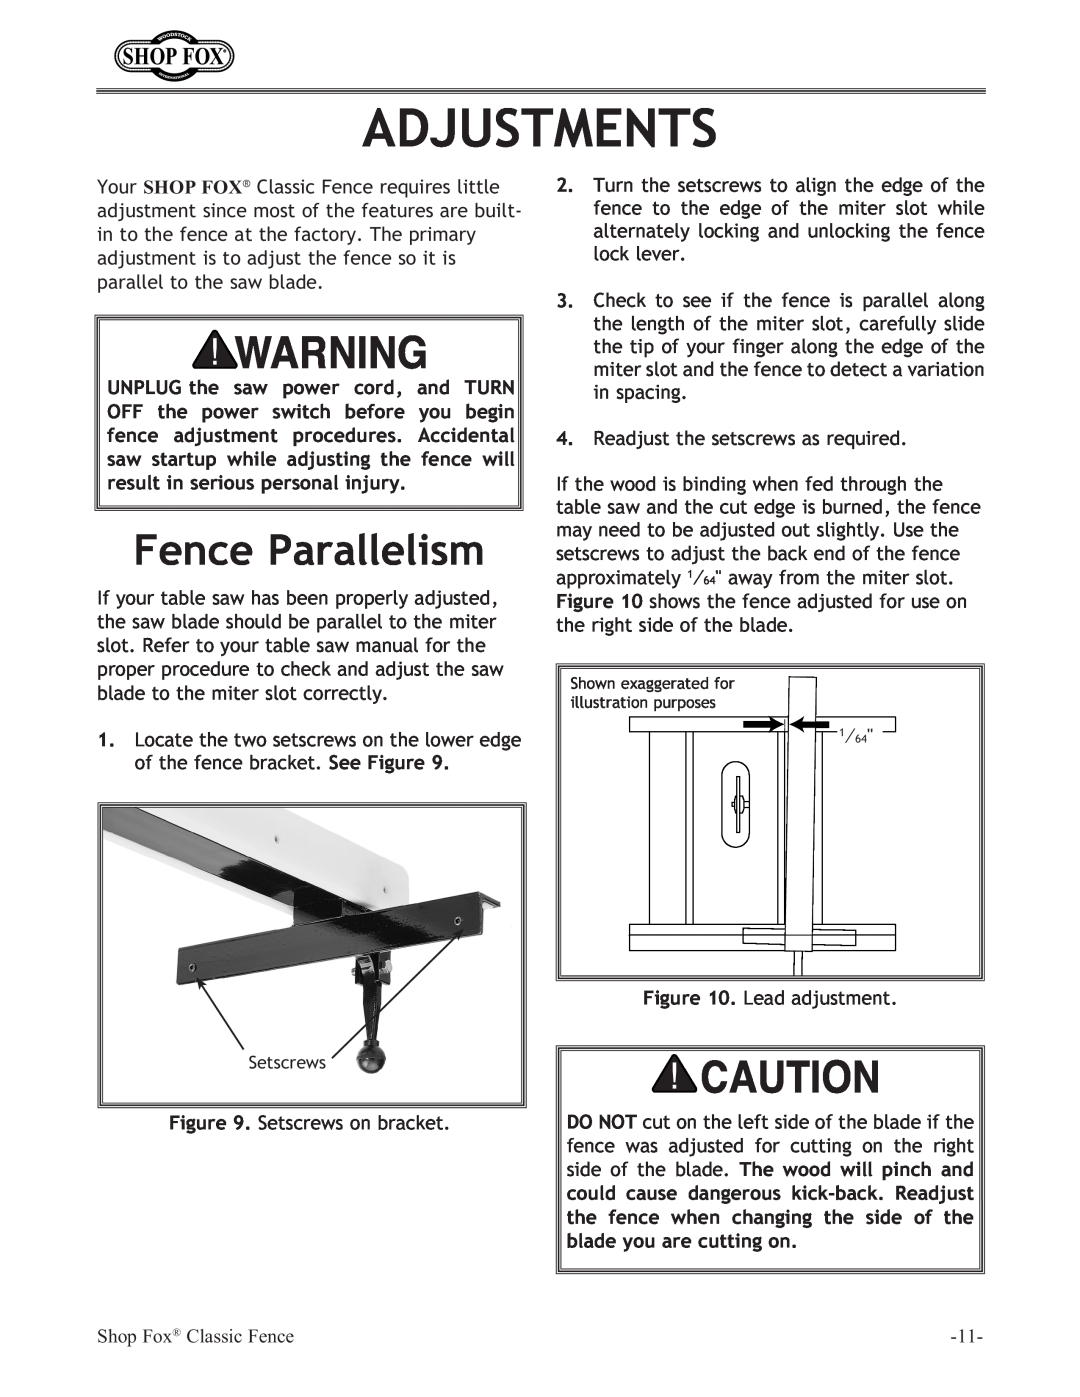 Woodstock W2007, W2005, W2006 instruction manual Adjustments, Fence Parallelism 